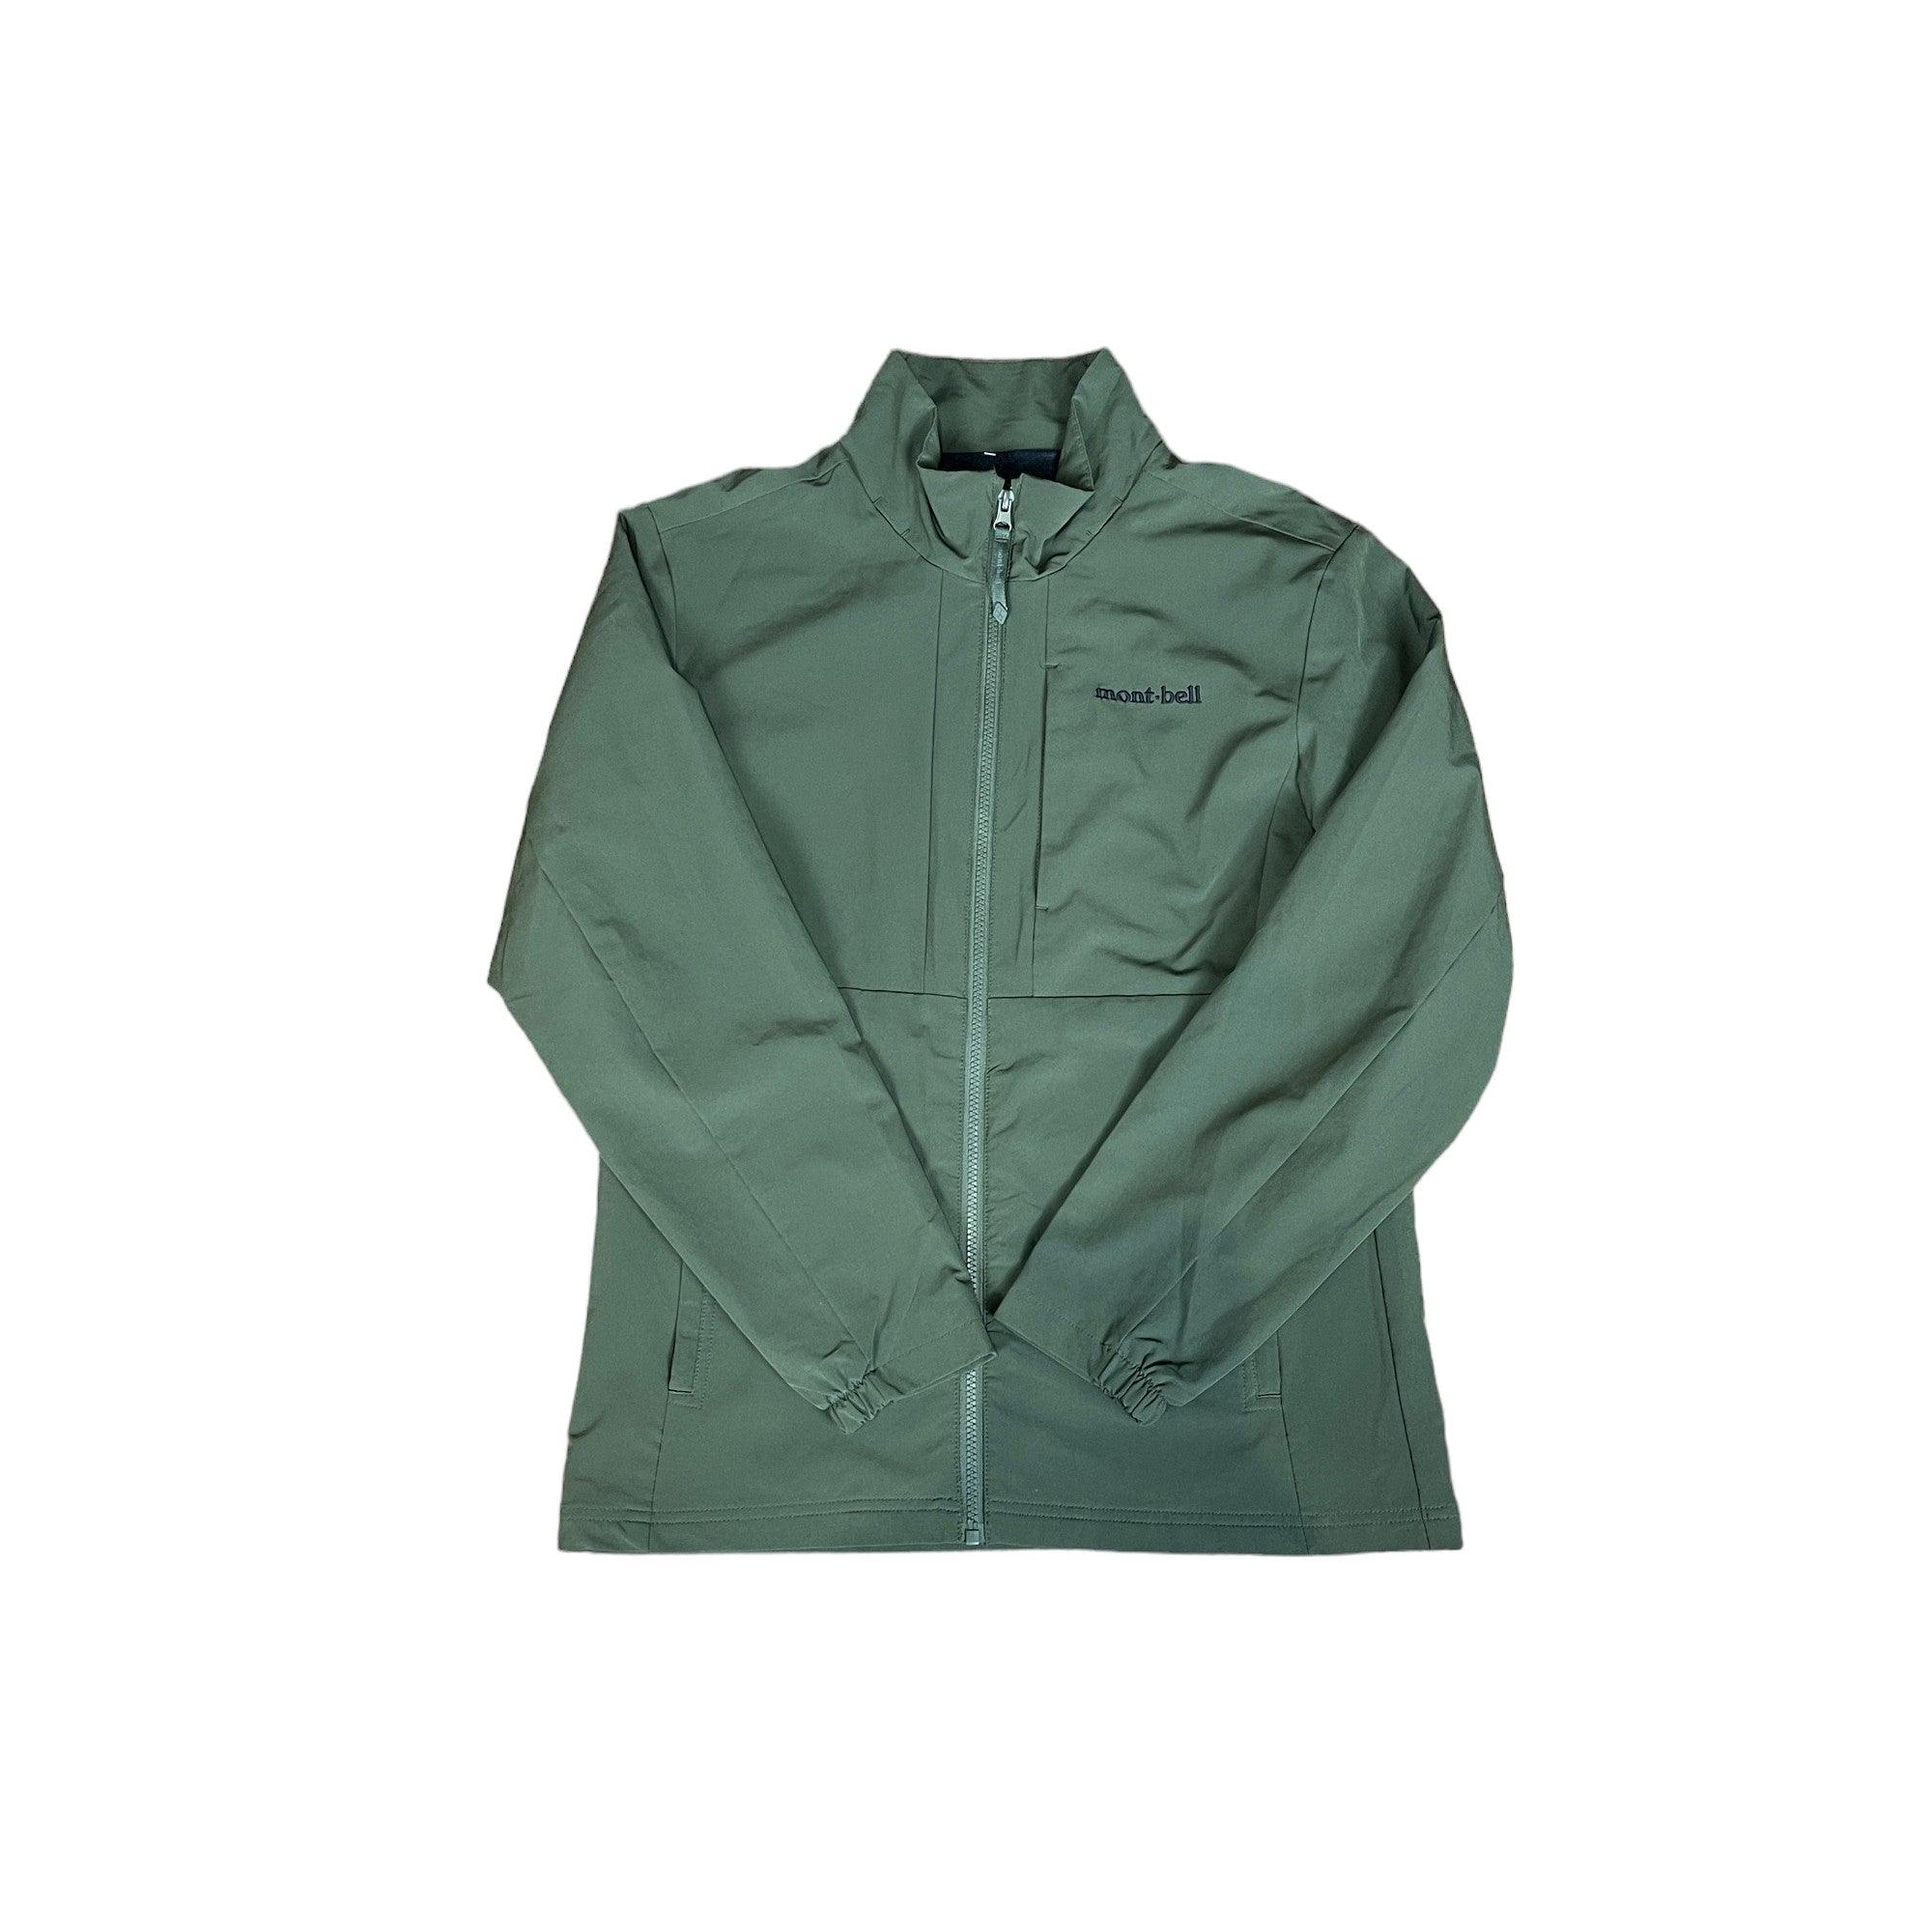 Vintage Green Montbell Jacket - Medium - The Streetwear Studio